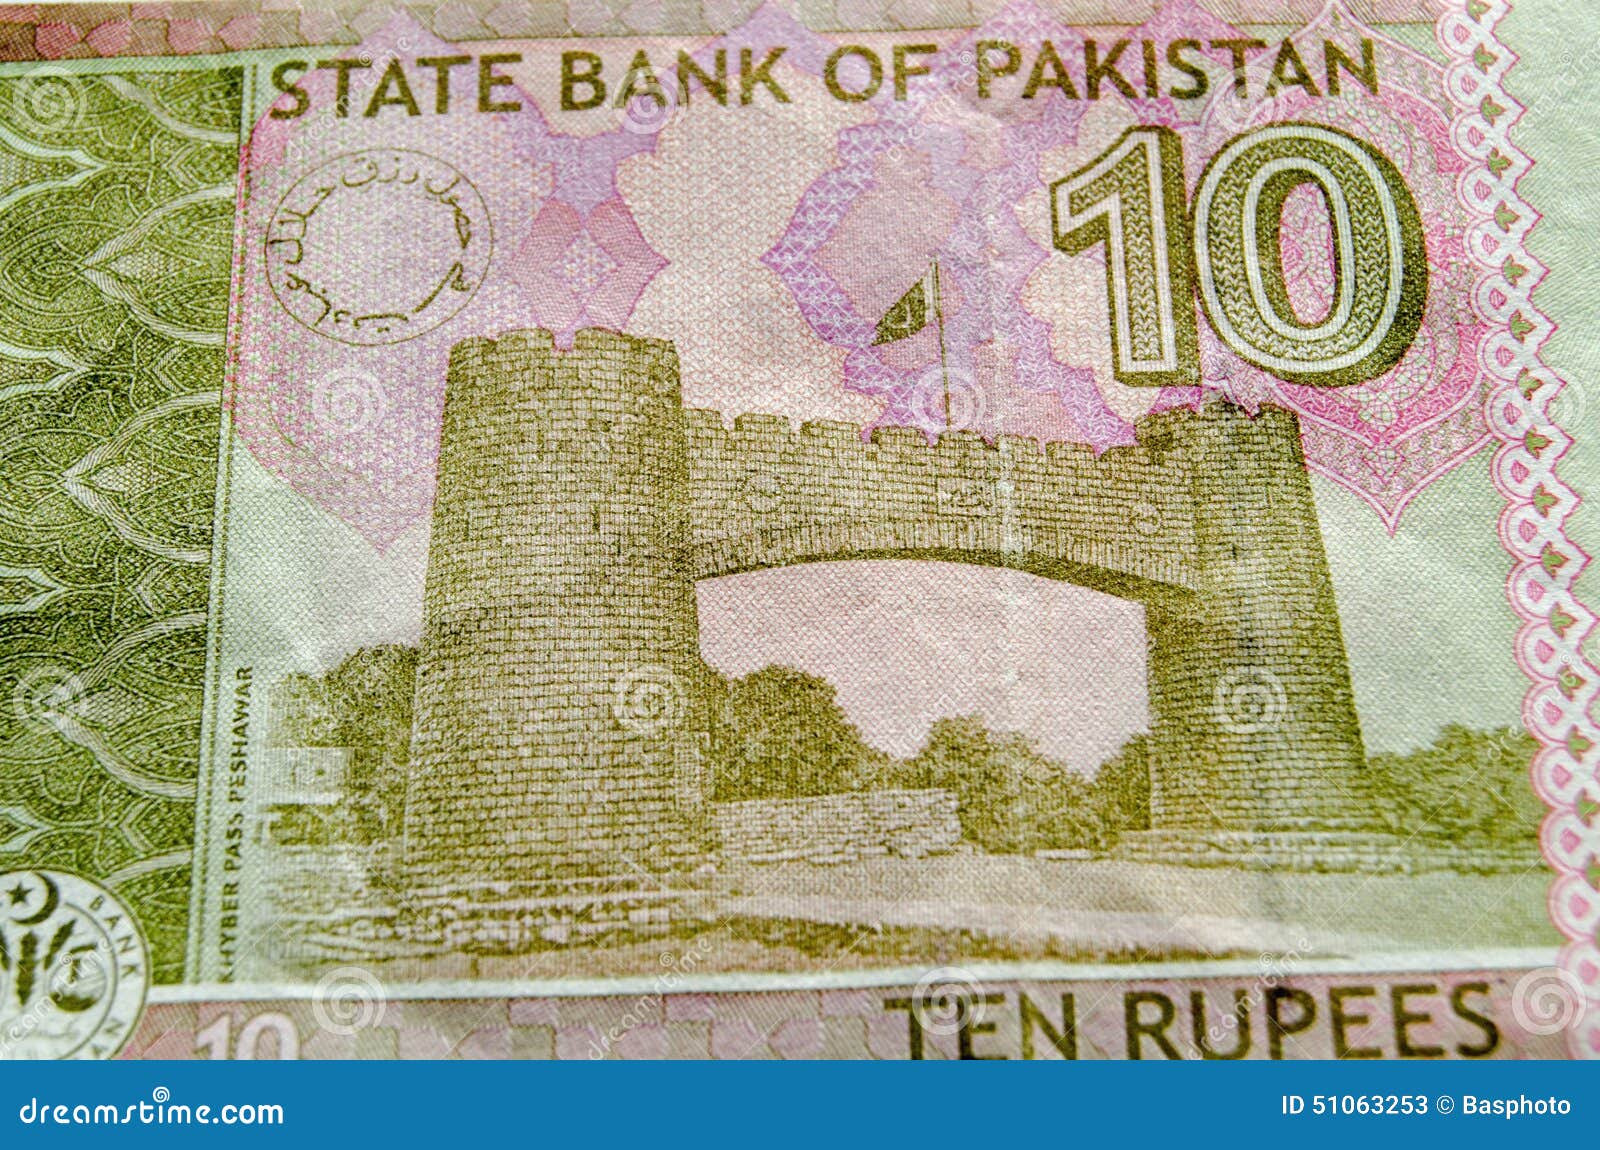 khyber pass on pakistan banknote